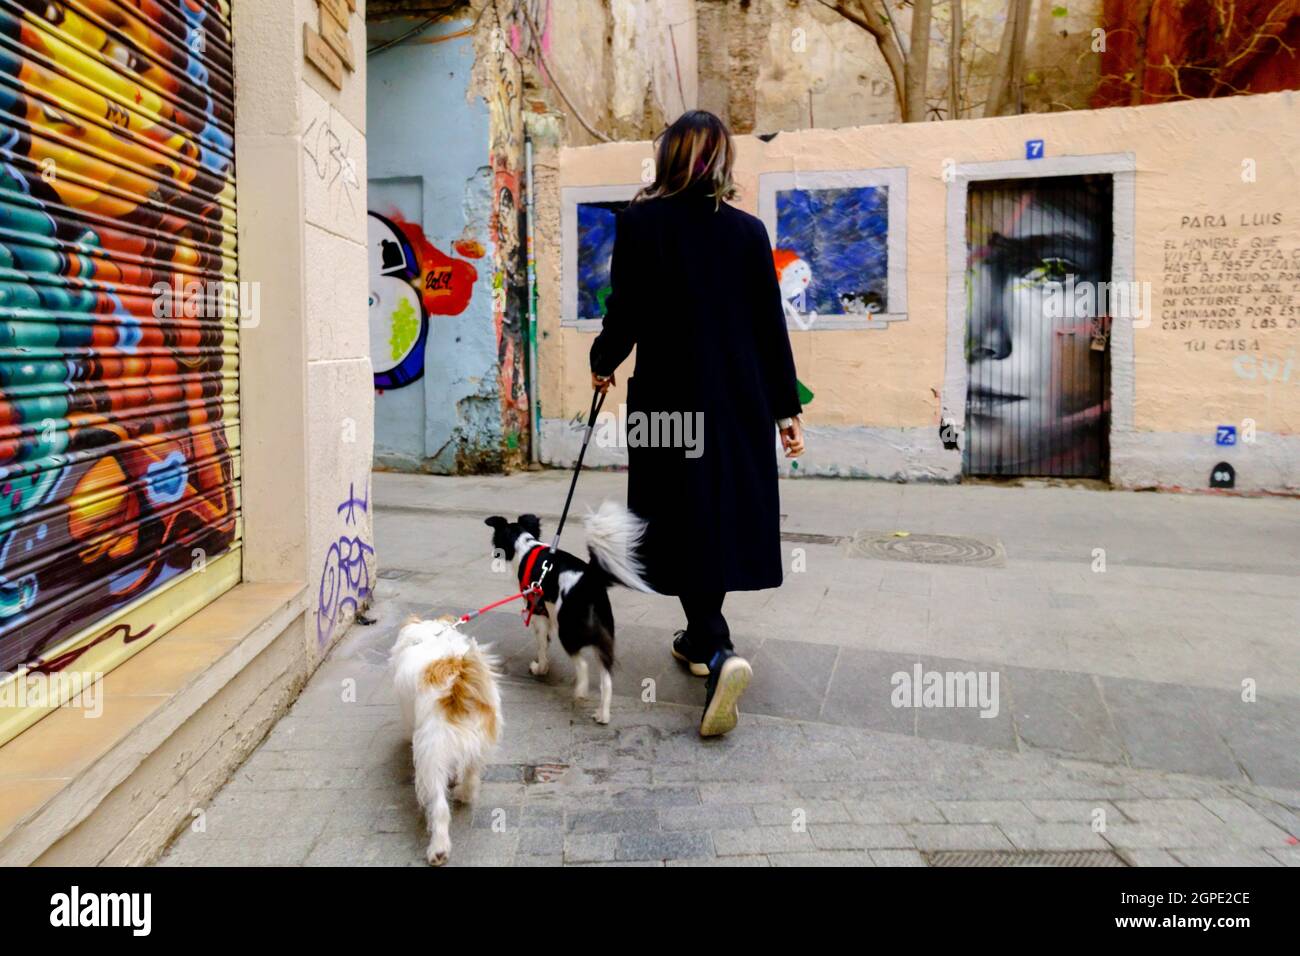 Woman walking with two dogs Spain Valencia street art in El Carmen district Stock Photo